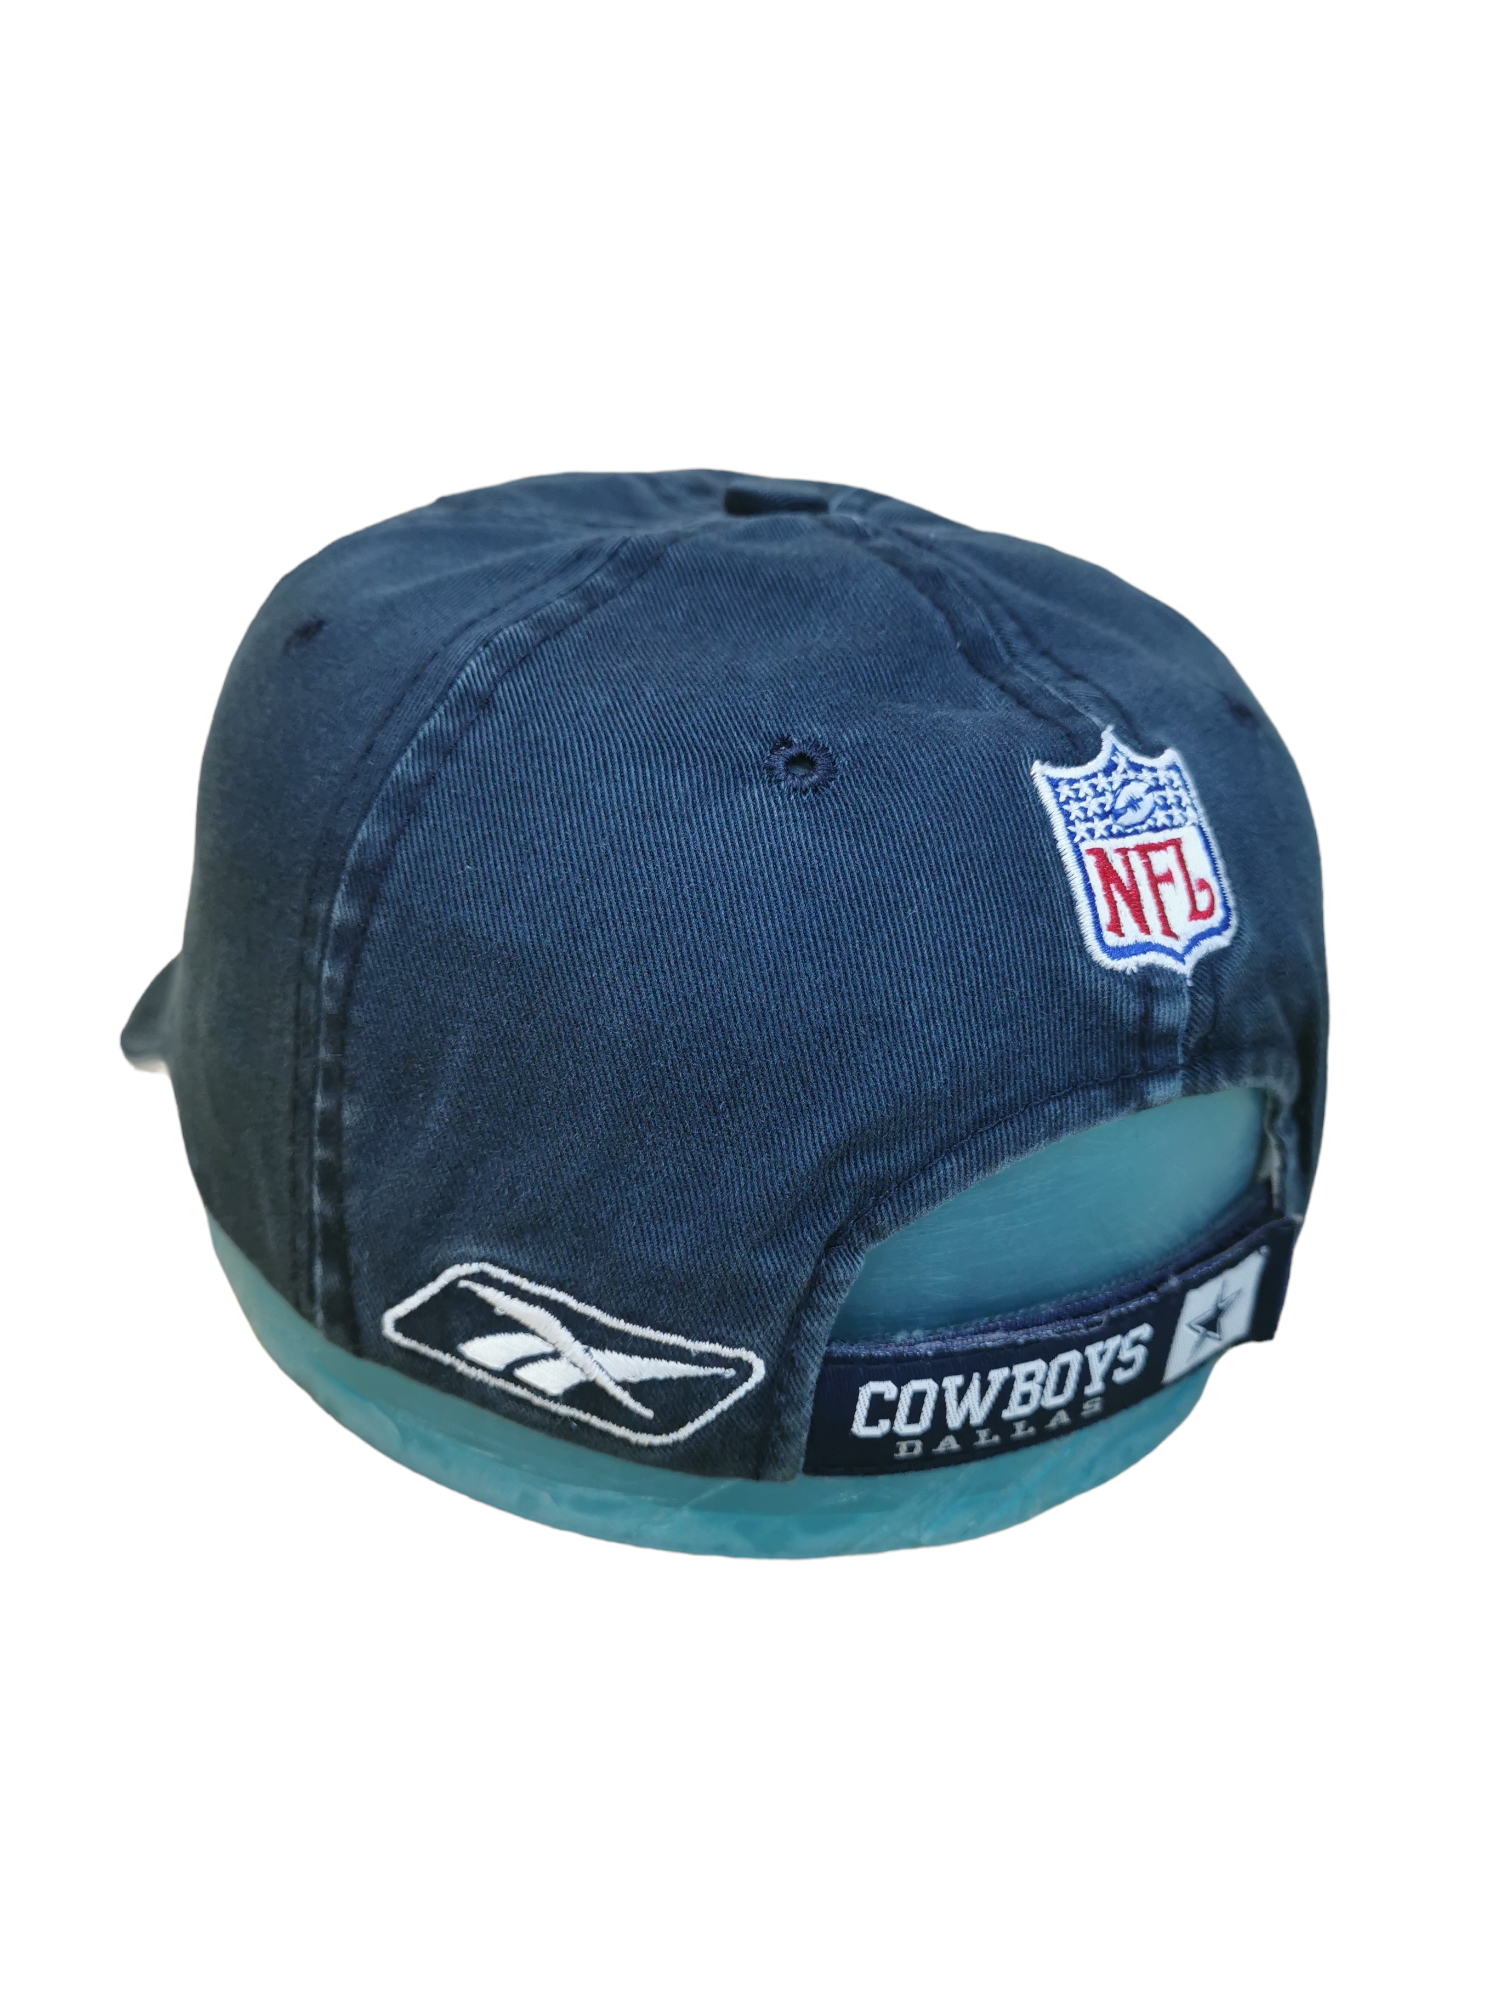 🔥FREE SHIPPING🔥 NFL DALLAS COWBOYS PRO LINE X REEBOK HAT - 3